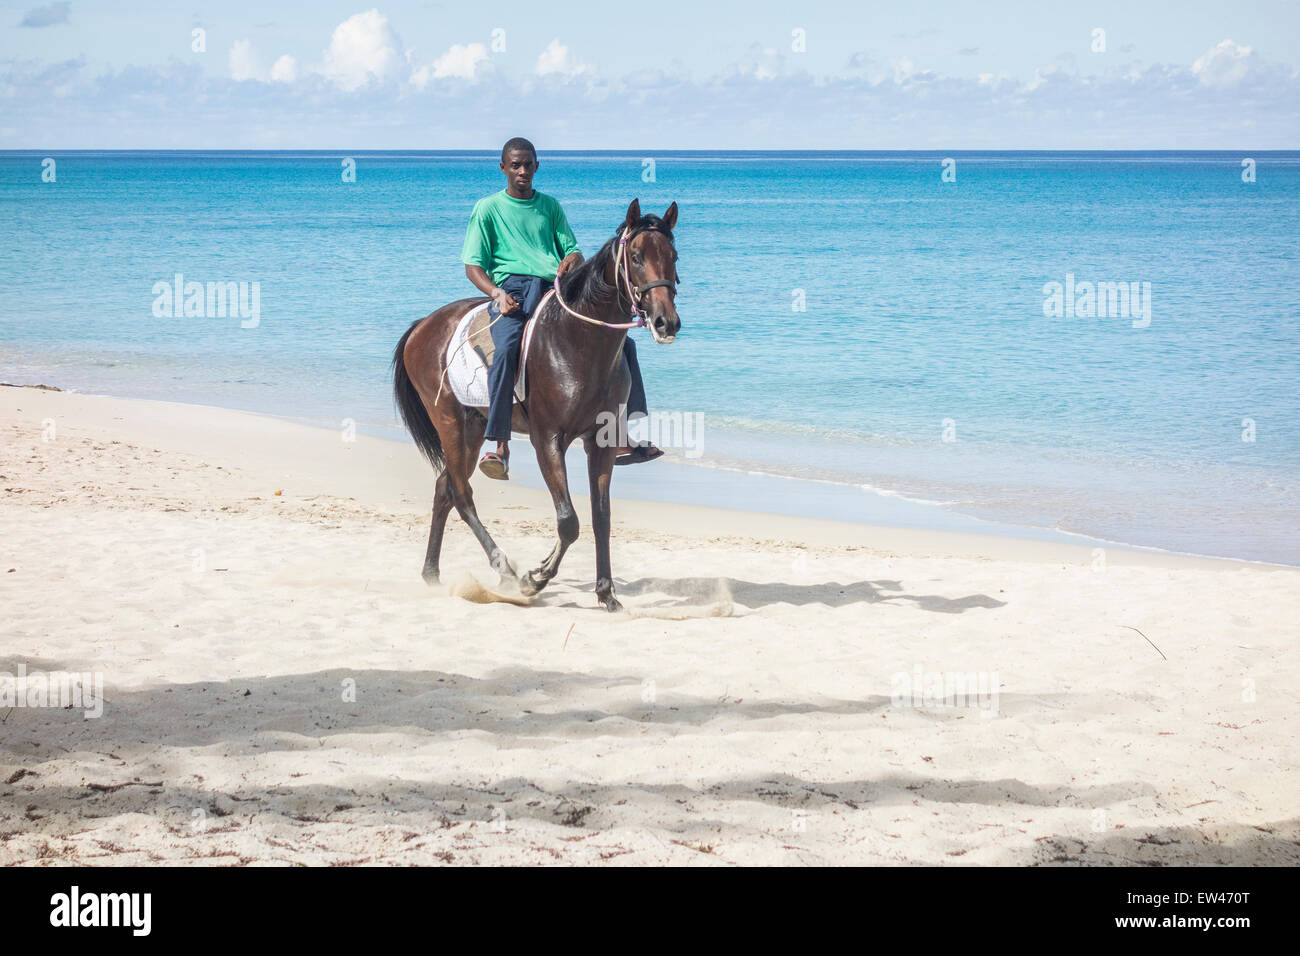 A native Crucian, or Cruzan, rides his horse on Sandcastle Beach in St. Croix, U.S. Virgin Islands. Stock Photo